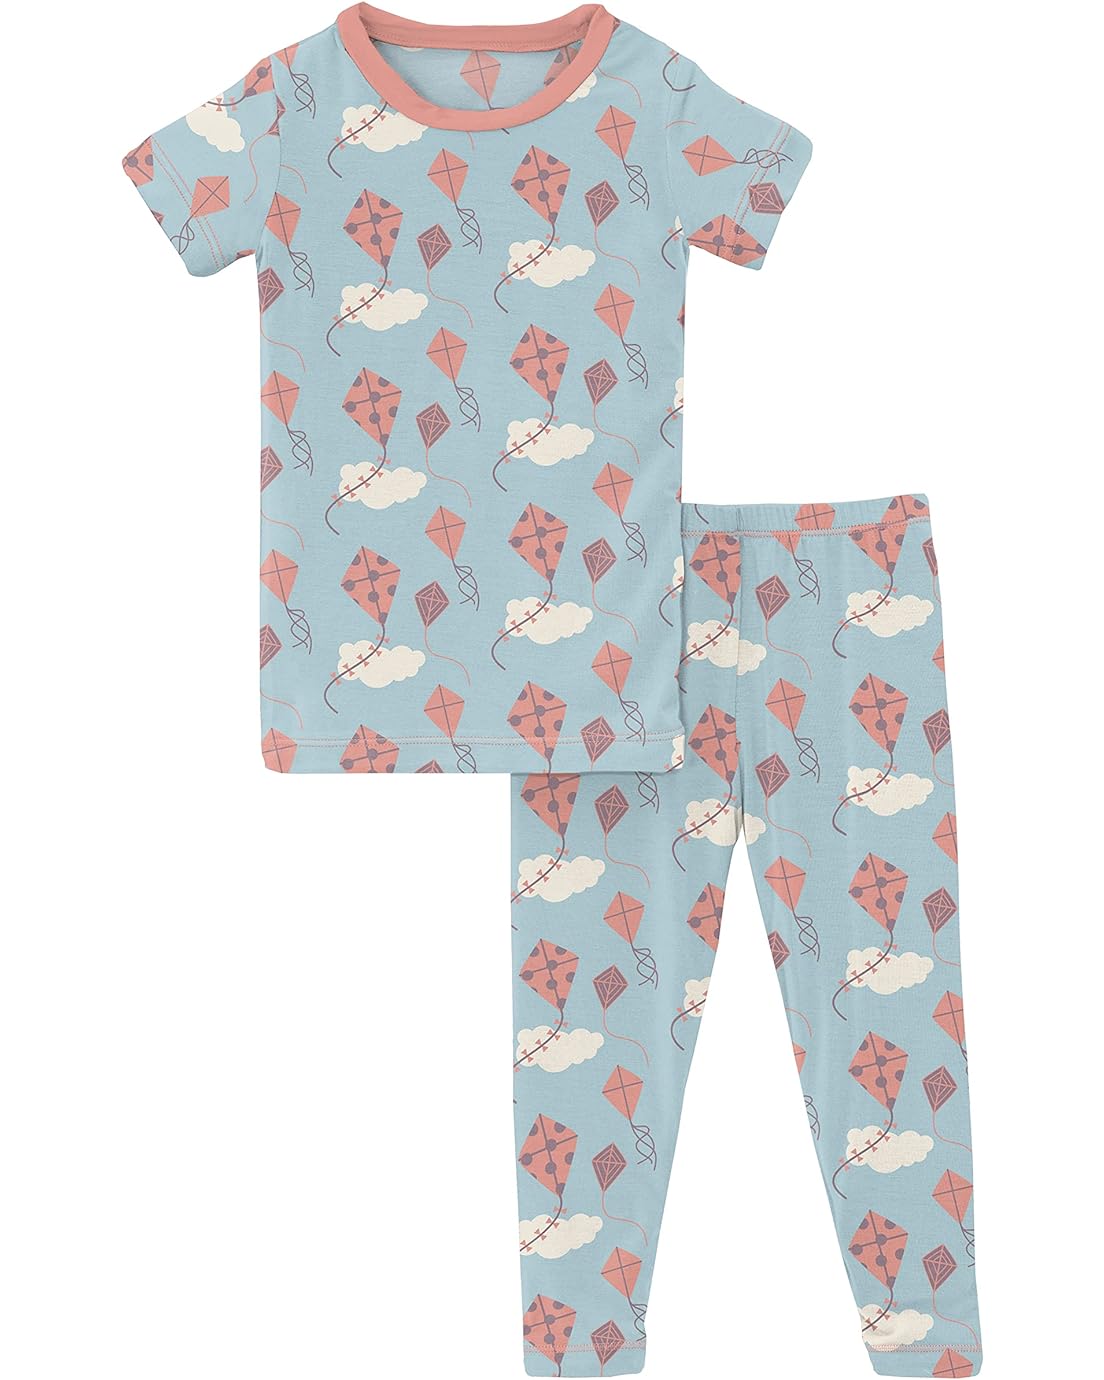 Kickee Pants Kids Short Sleeve Pajama Set (Toddleru002FLittle Kids)